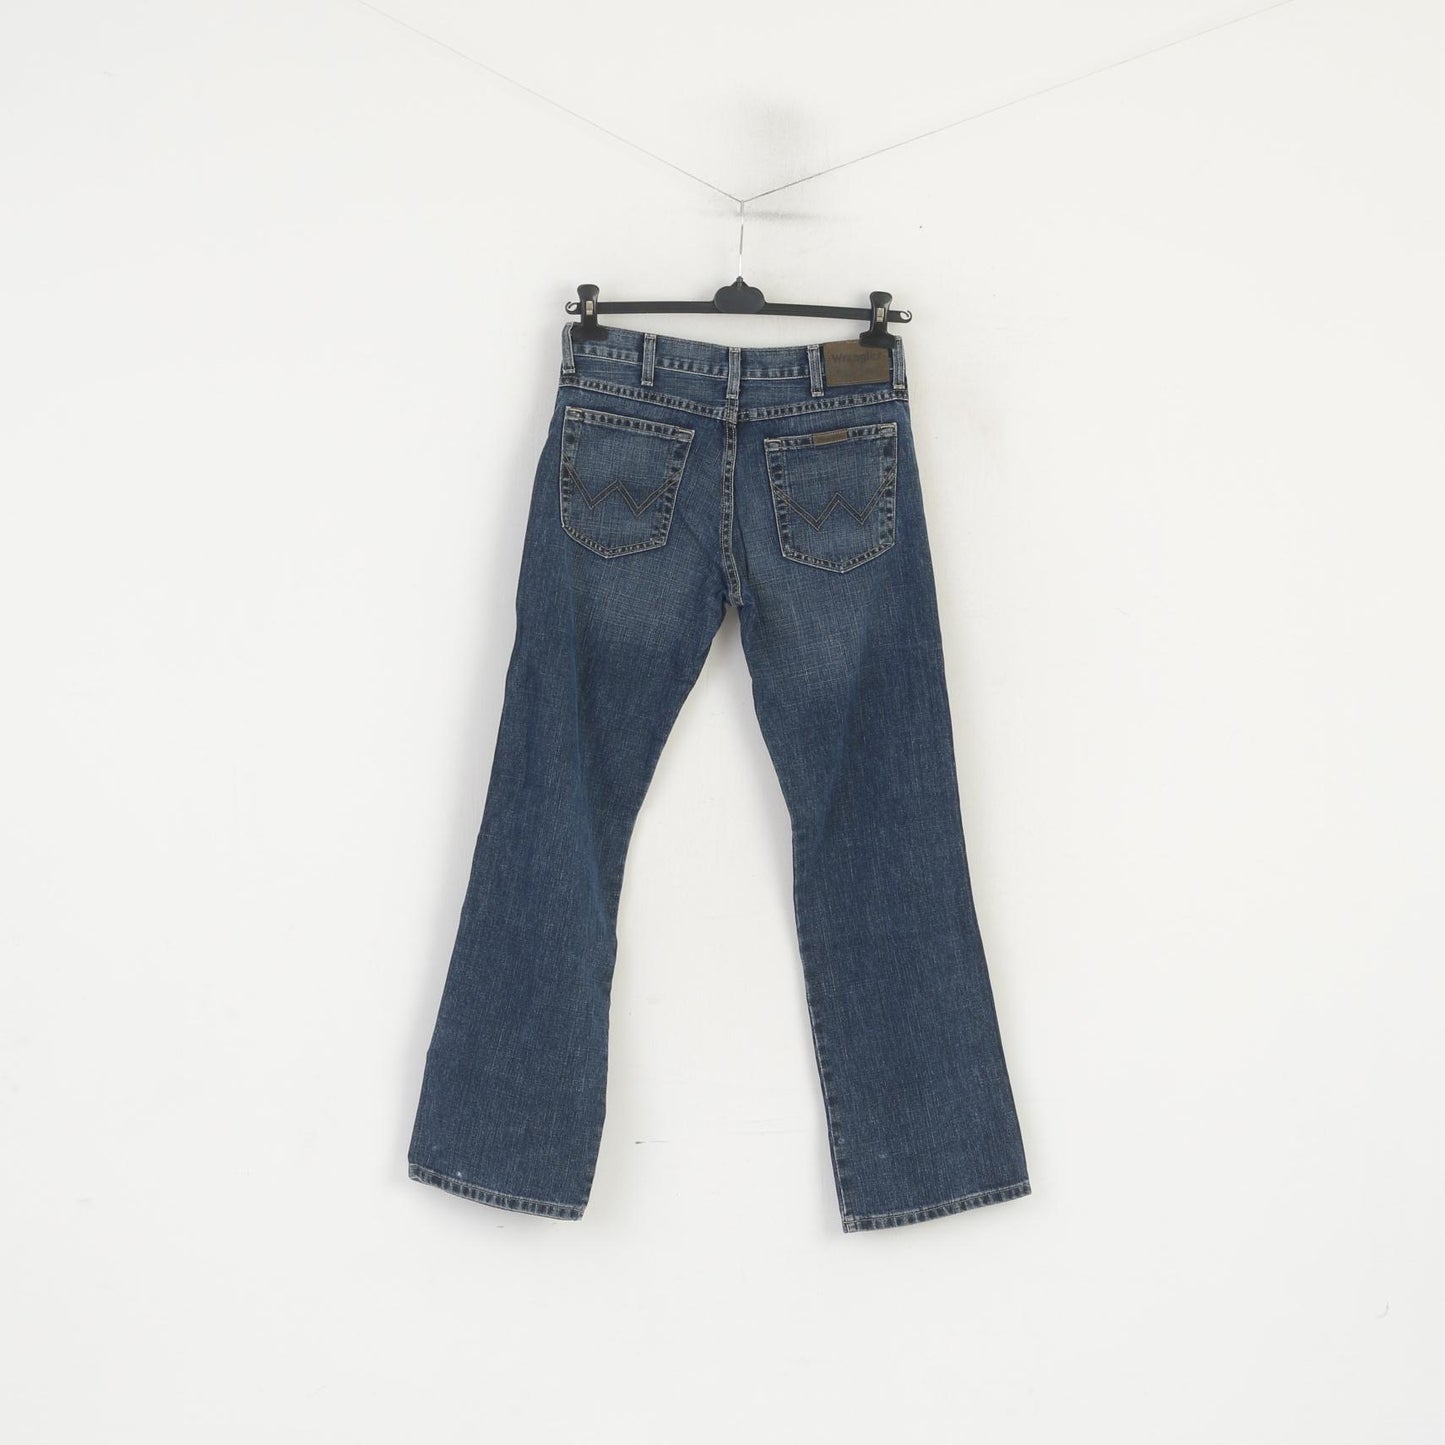 Wrangler Women 30 Jeans Trousers Navy Denim Cotton Vintage Bootcut Pants